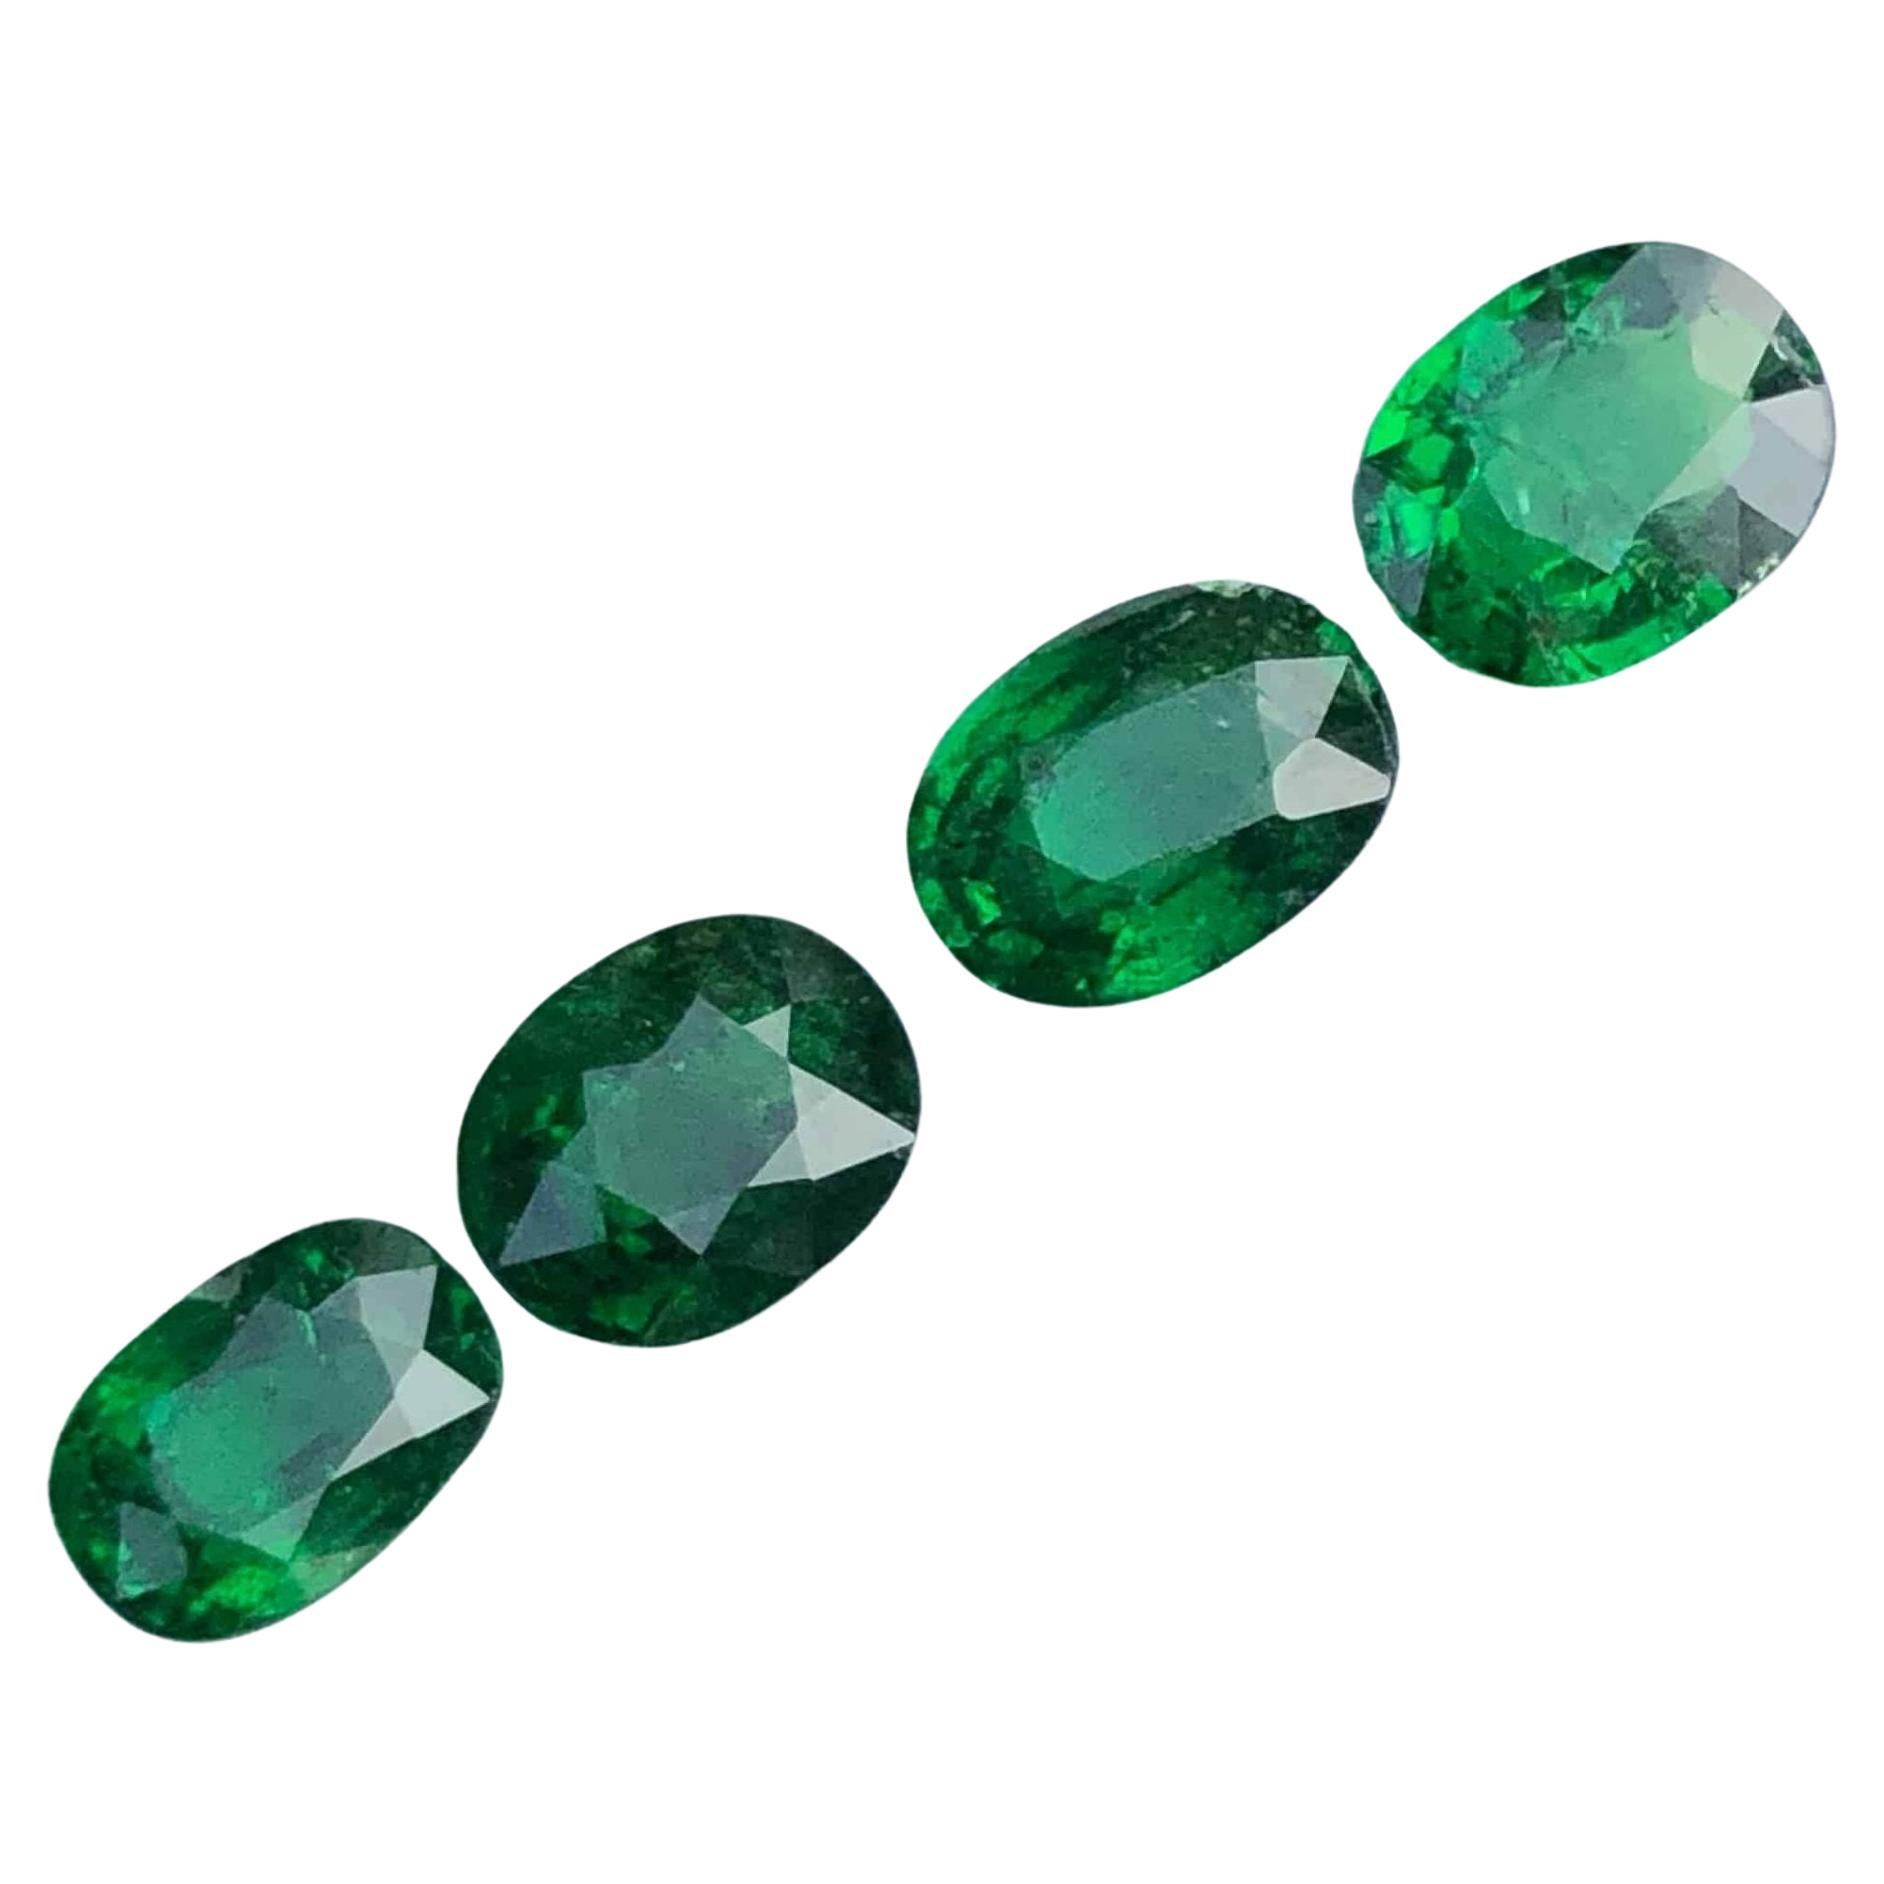 5.60 Carats Natural Tsavorite Green Garnet Set Loose Gemstones From Kenya For Sale